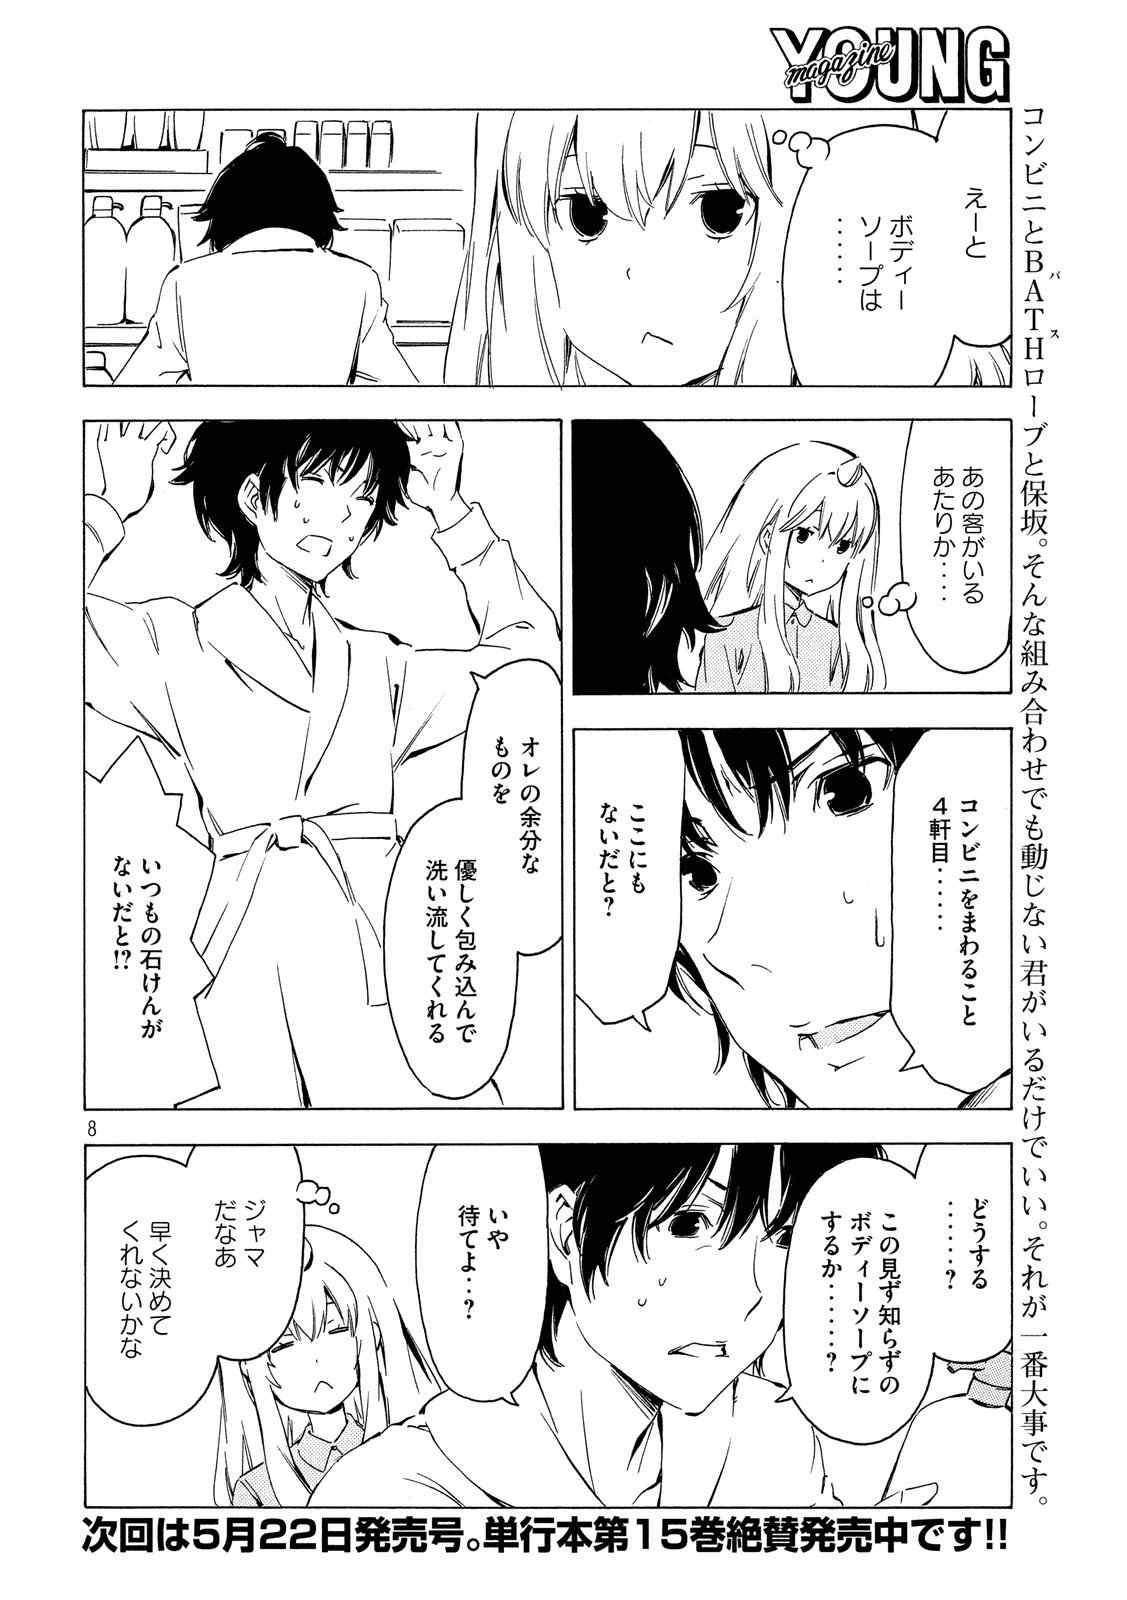 Minami-ke - Chapter 316 - Page 8